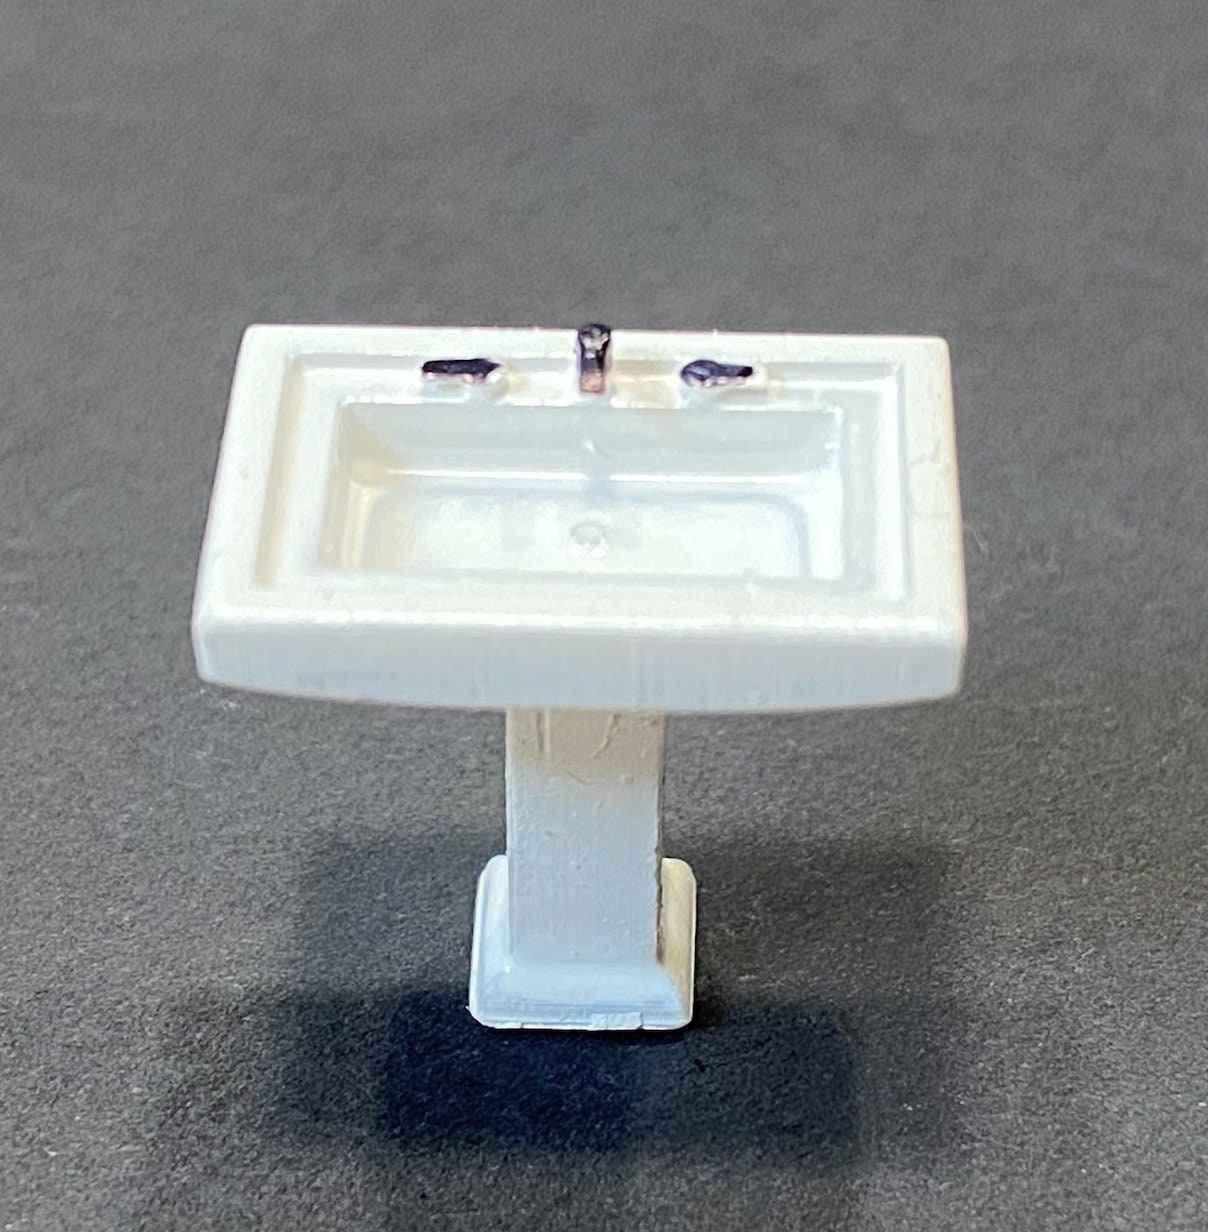 LHCER 1/24 Dollhouse Miniature Bathroom Set Simulation Ceramic